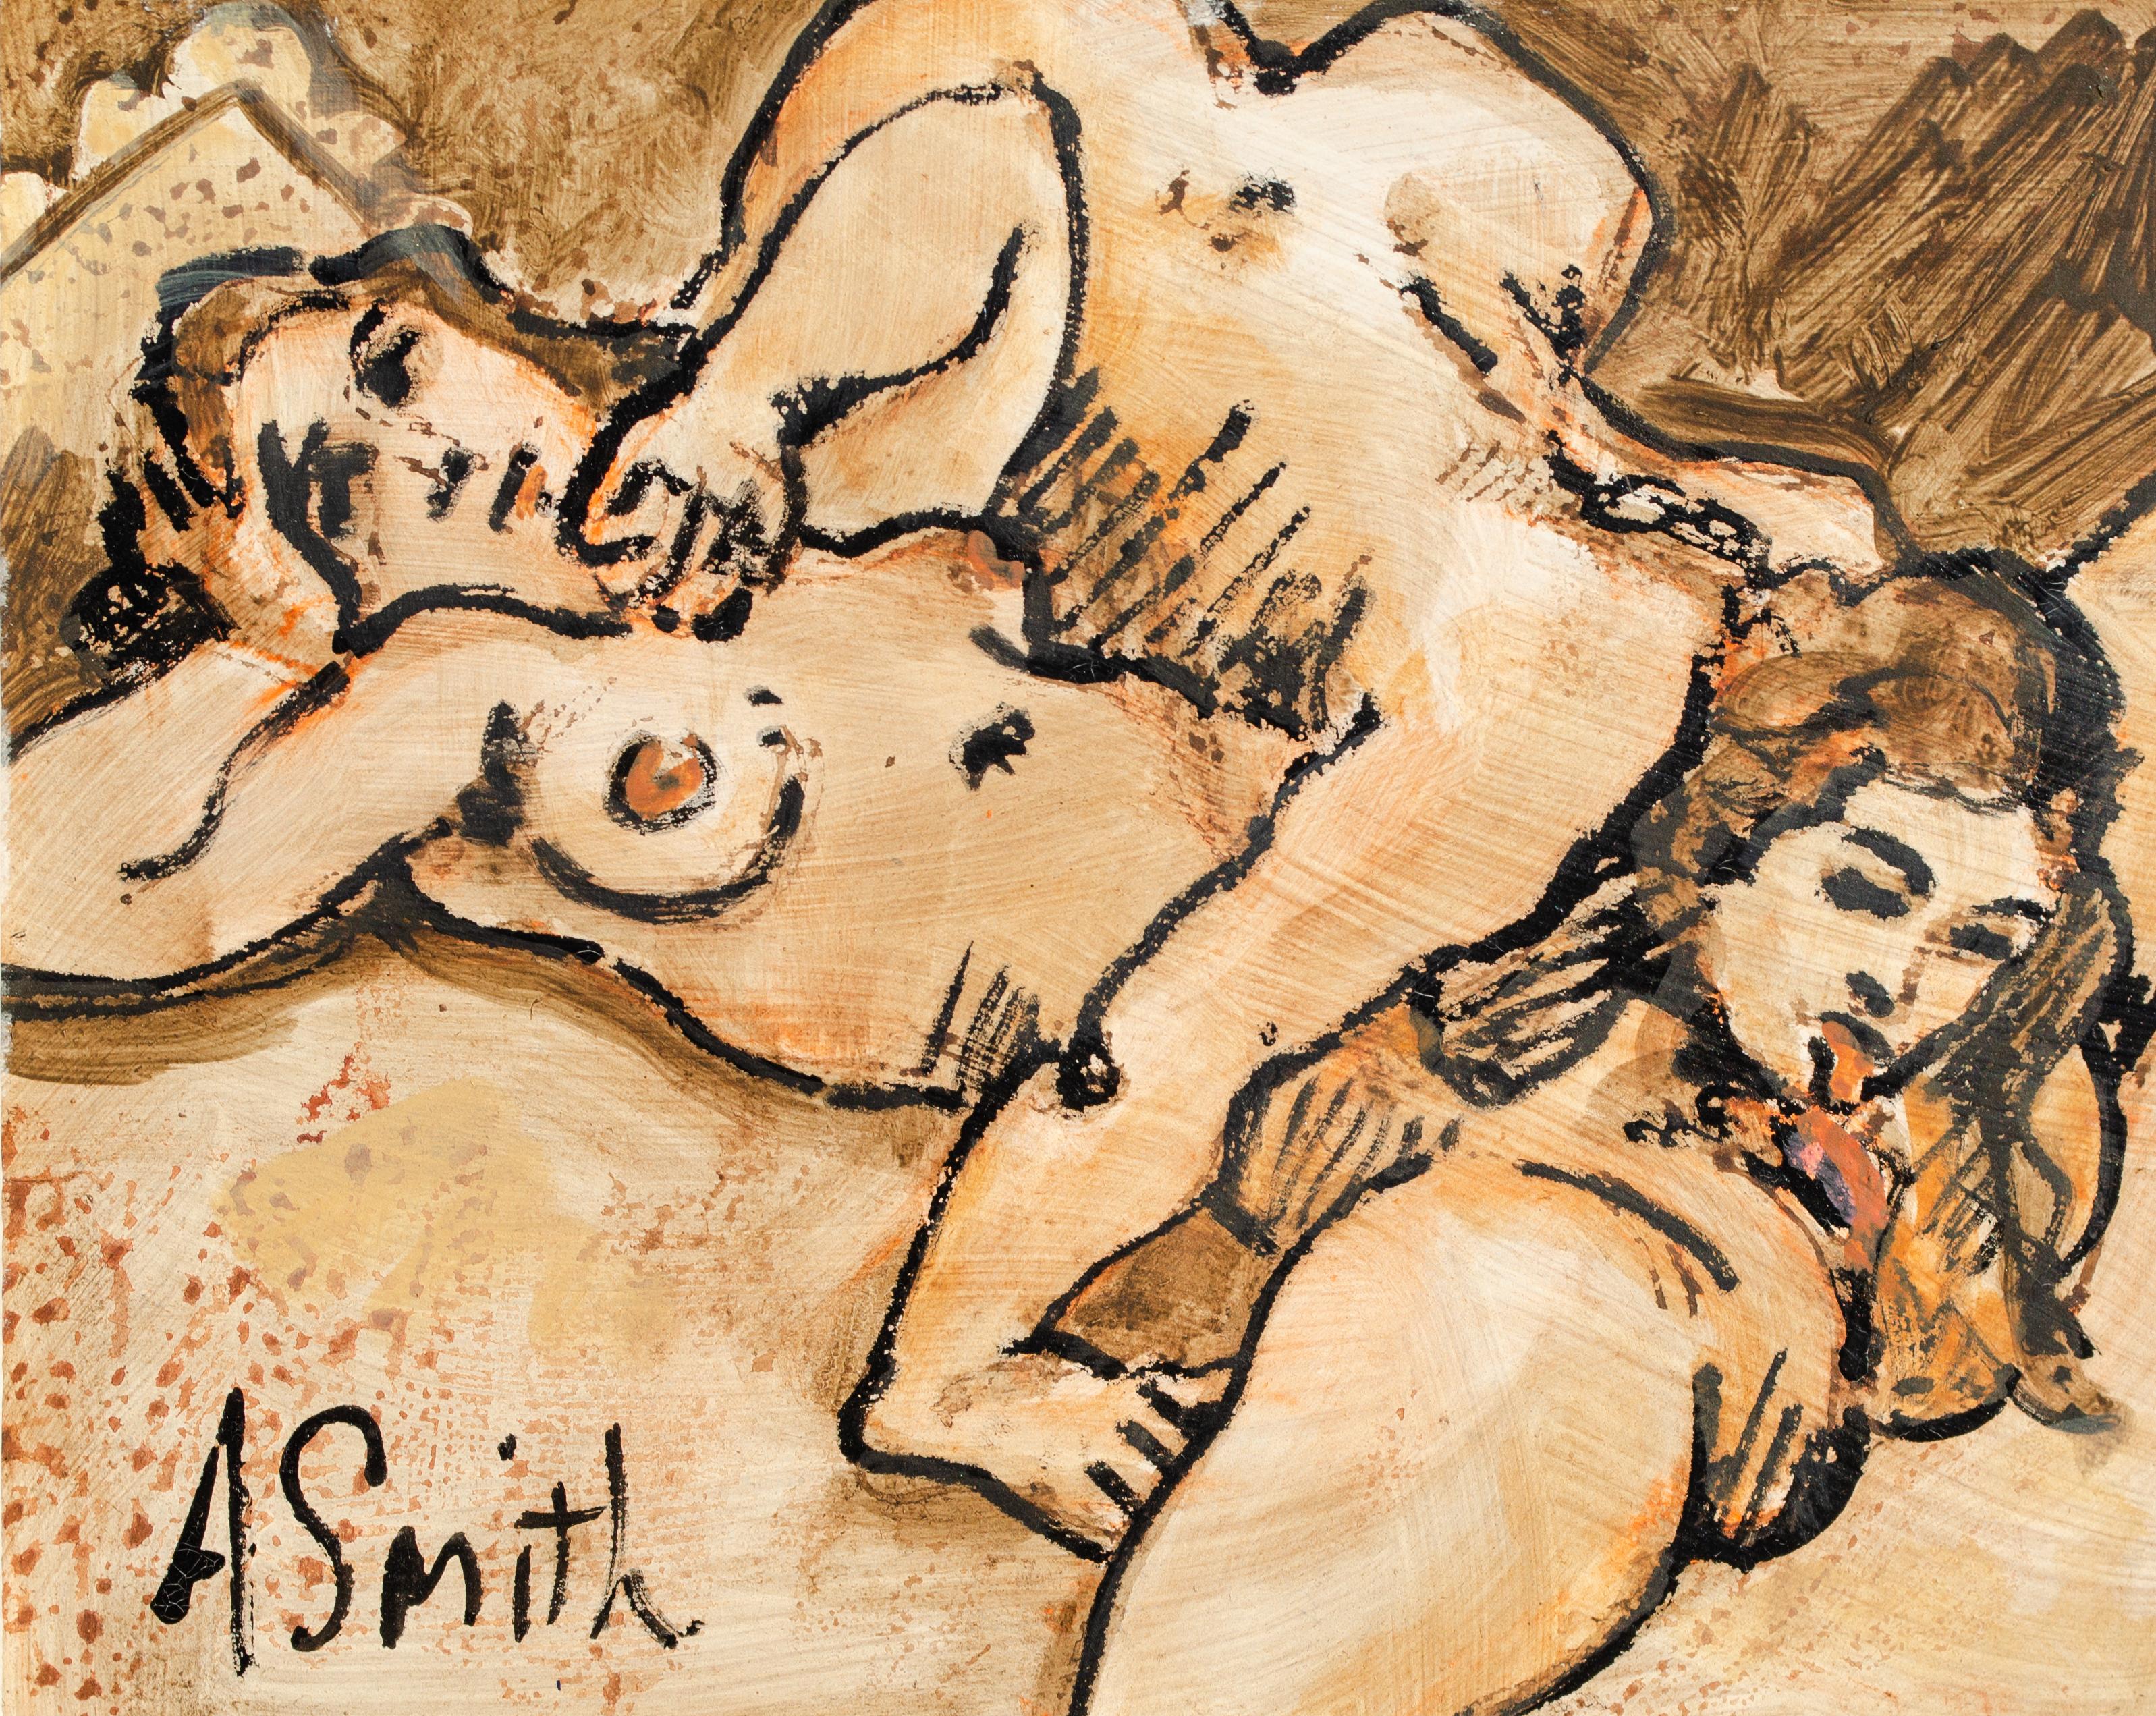 Original Arthur Smith Modernist Erotic Painting